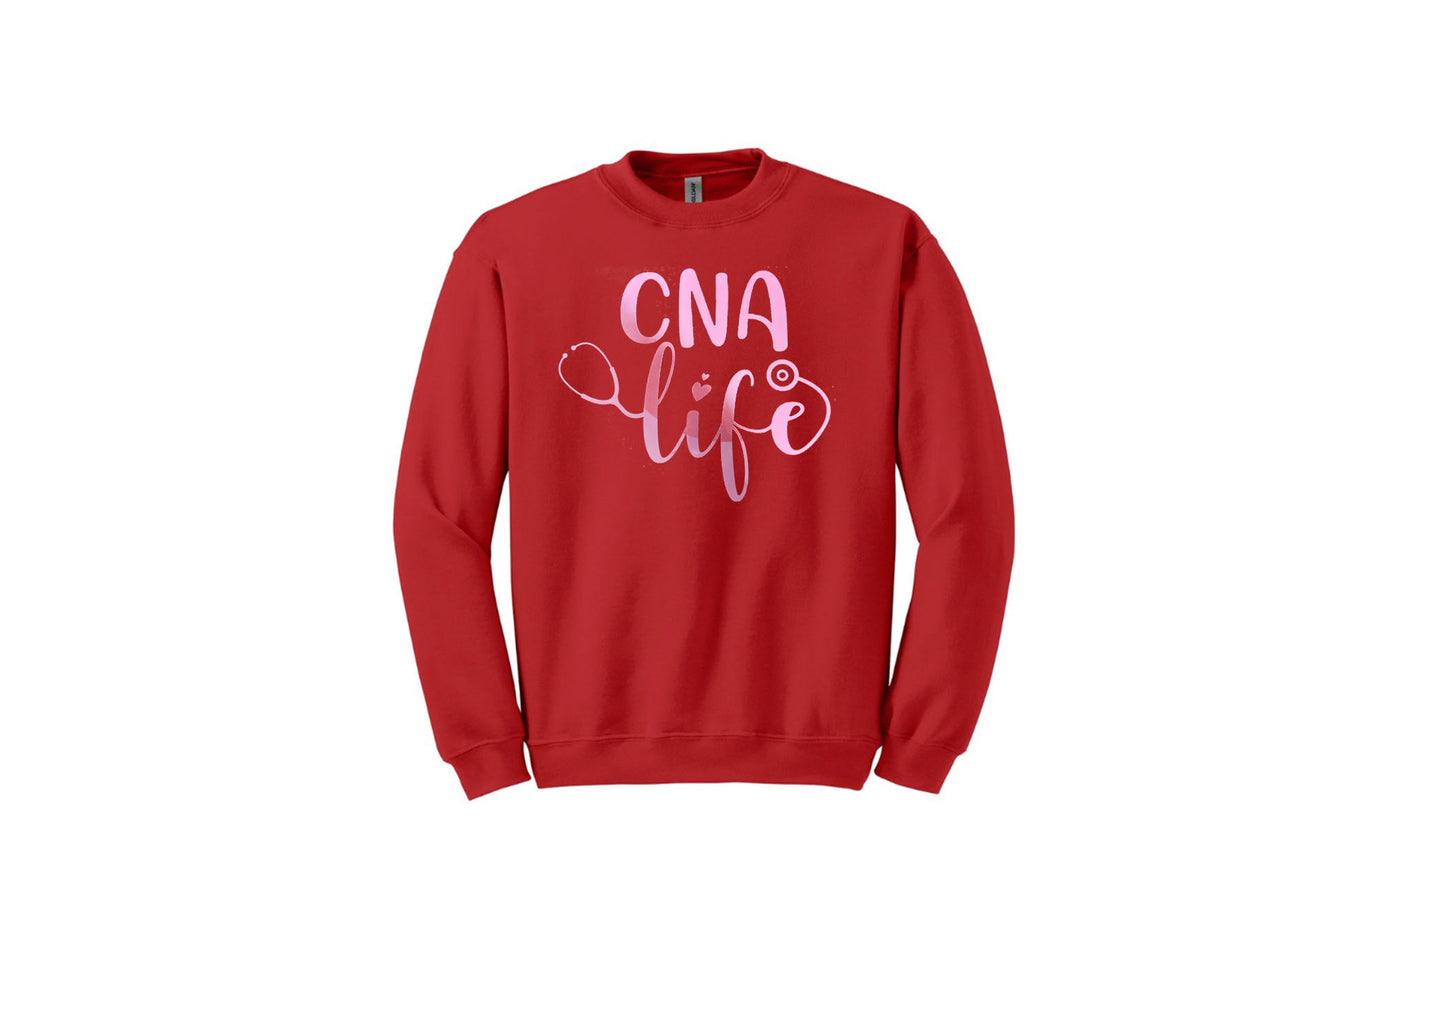 CNA Life Unisex Shirts or Crew